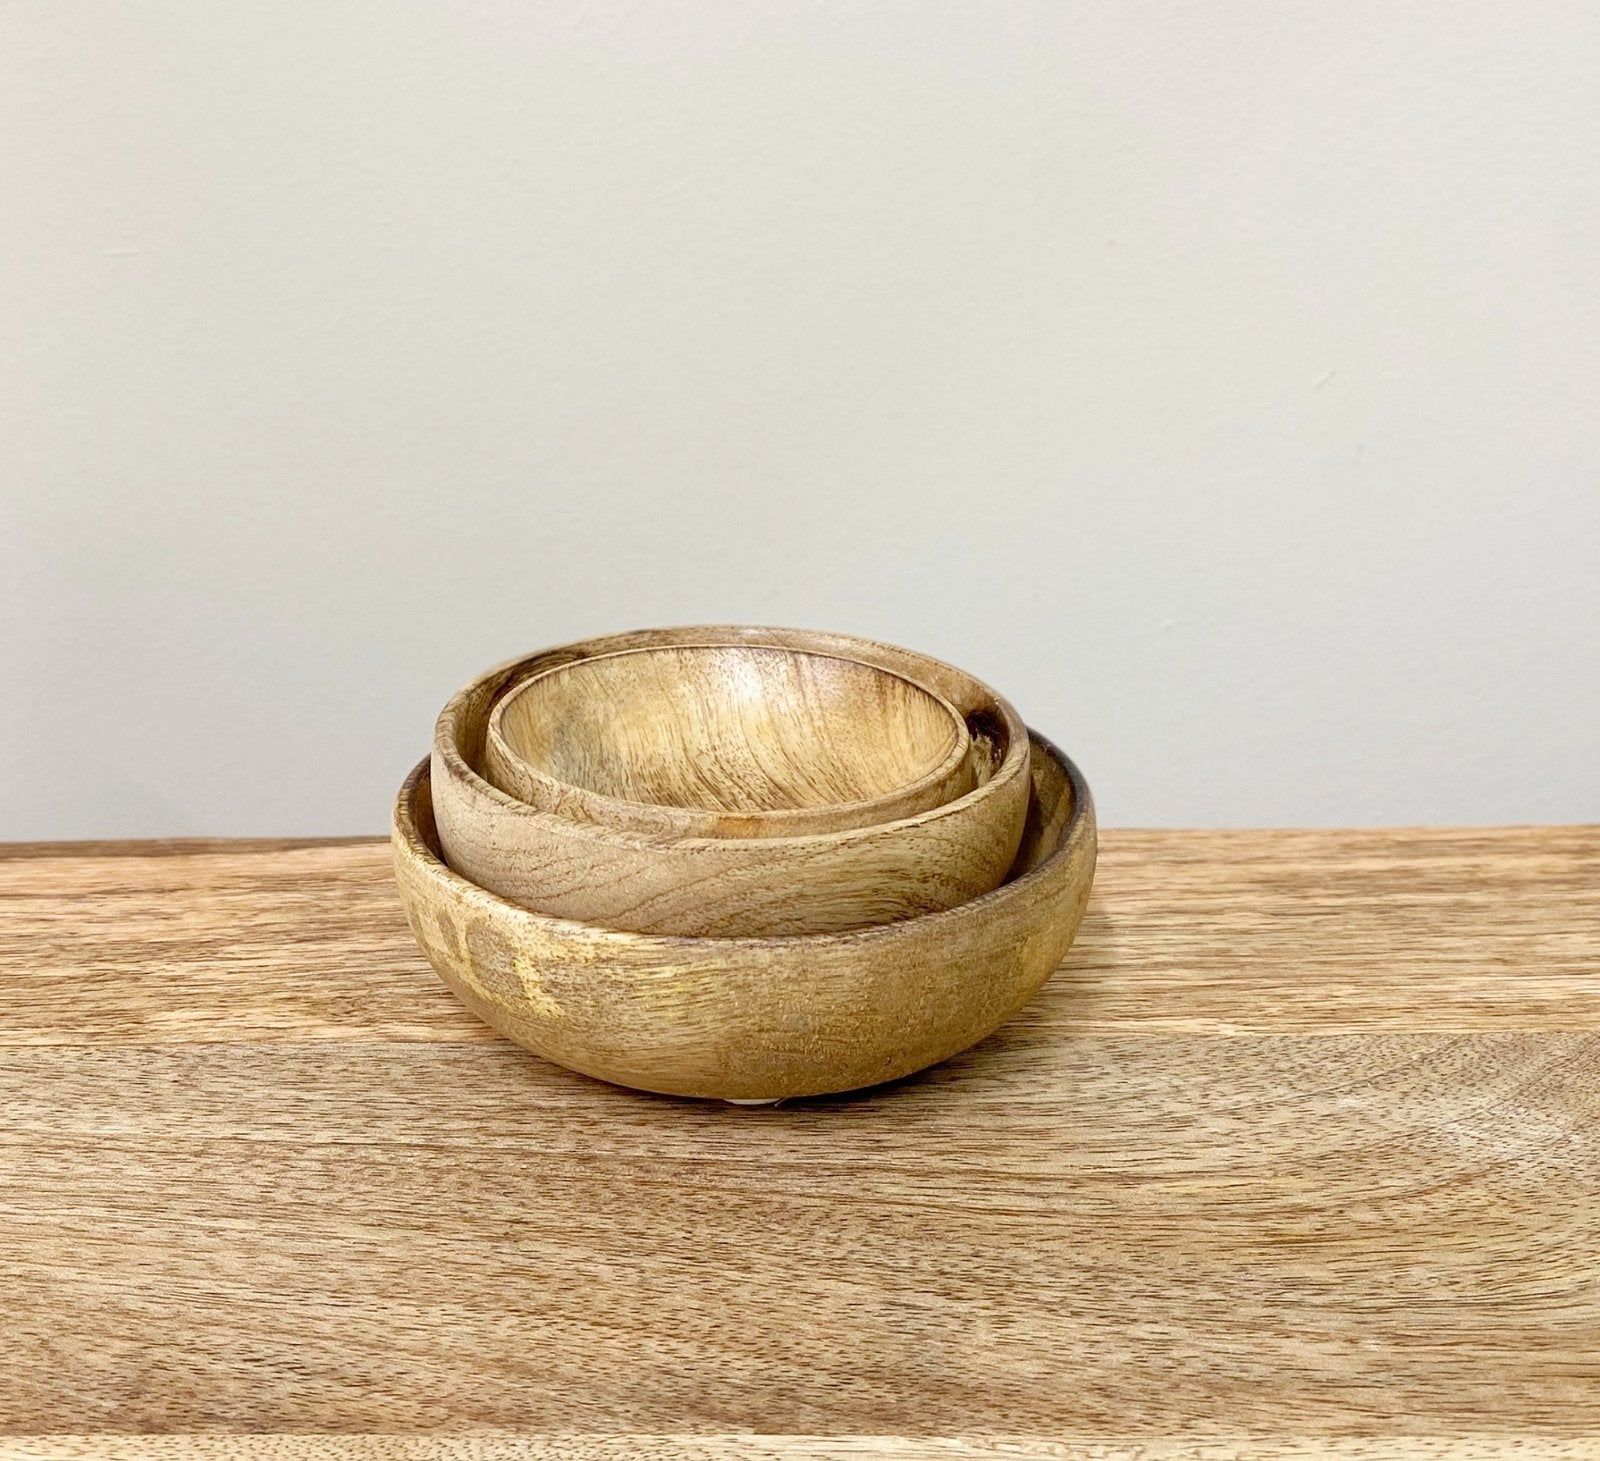 Mango Wood Round Bowls Three Piece